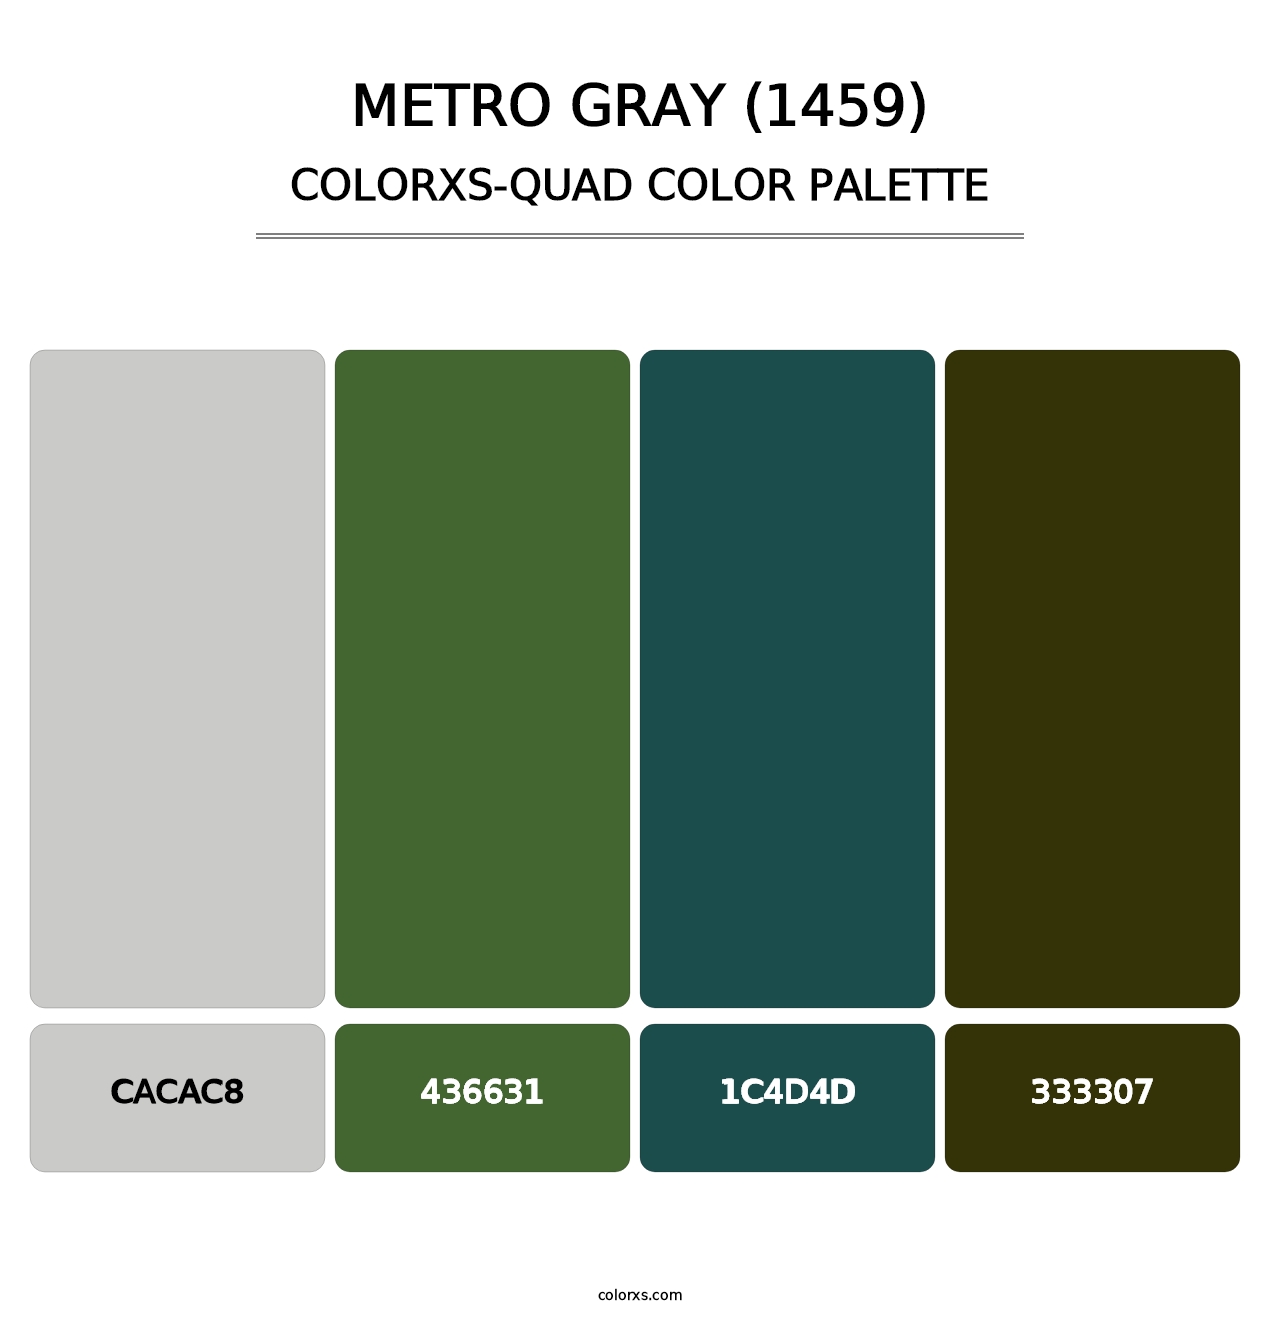 Metro Gray (1459) - Colorxs Quad Palette